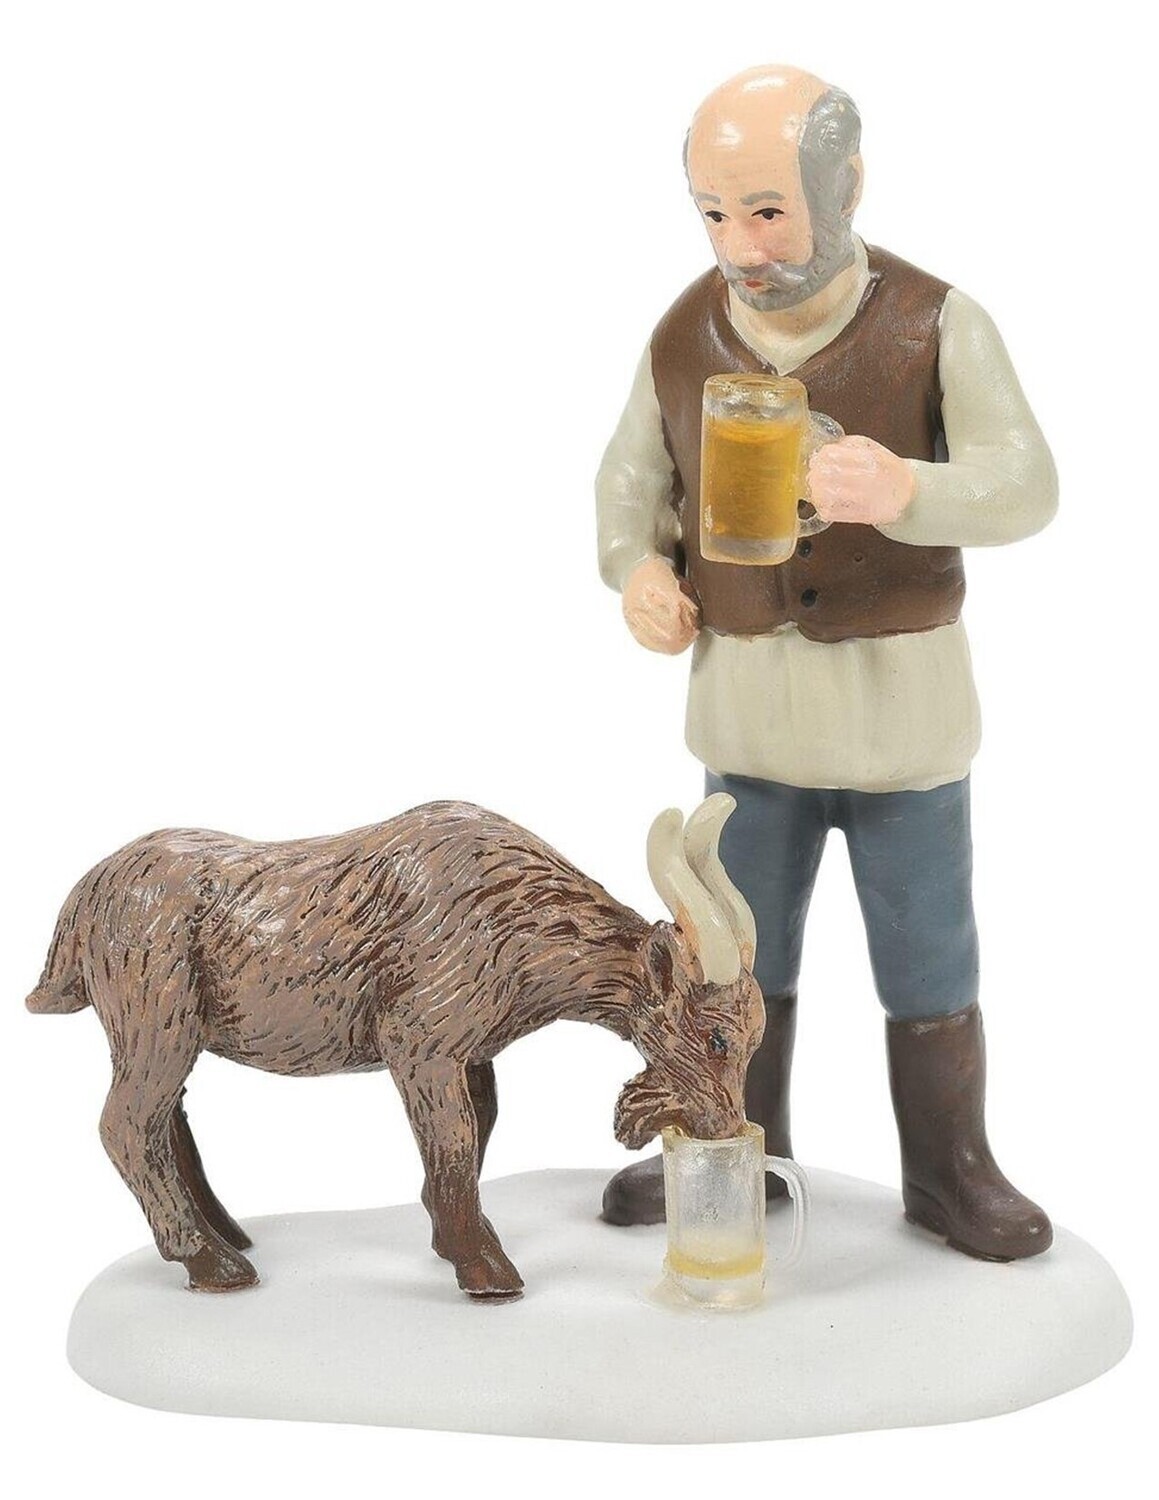 Department 56 Dickens Village "Drinking Mates" Figurine (6011393)